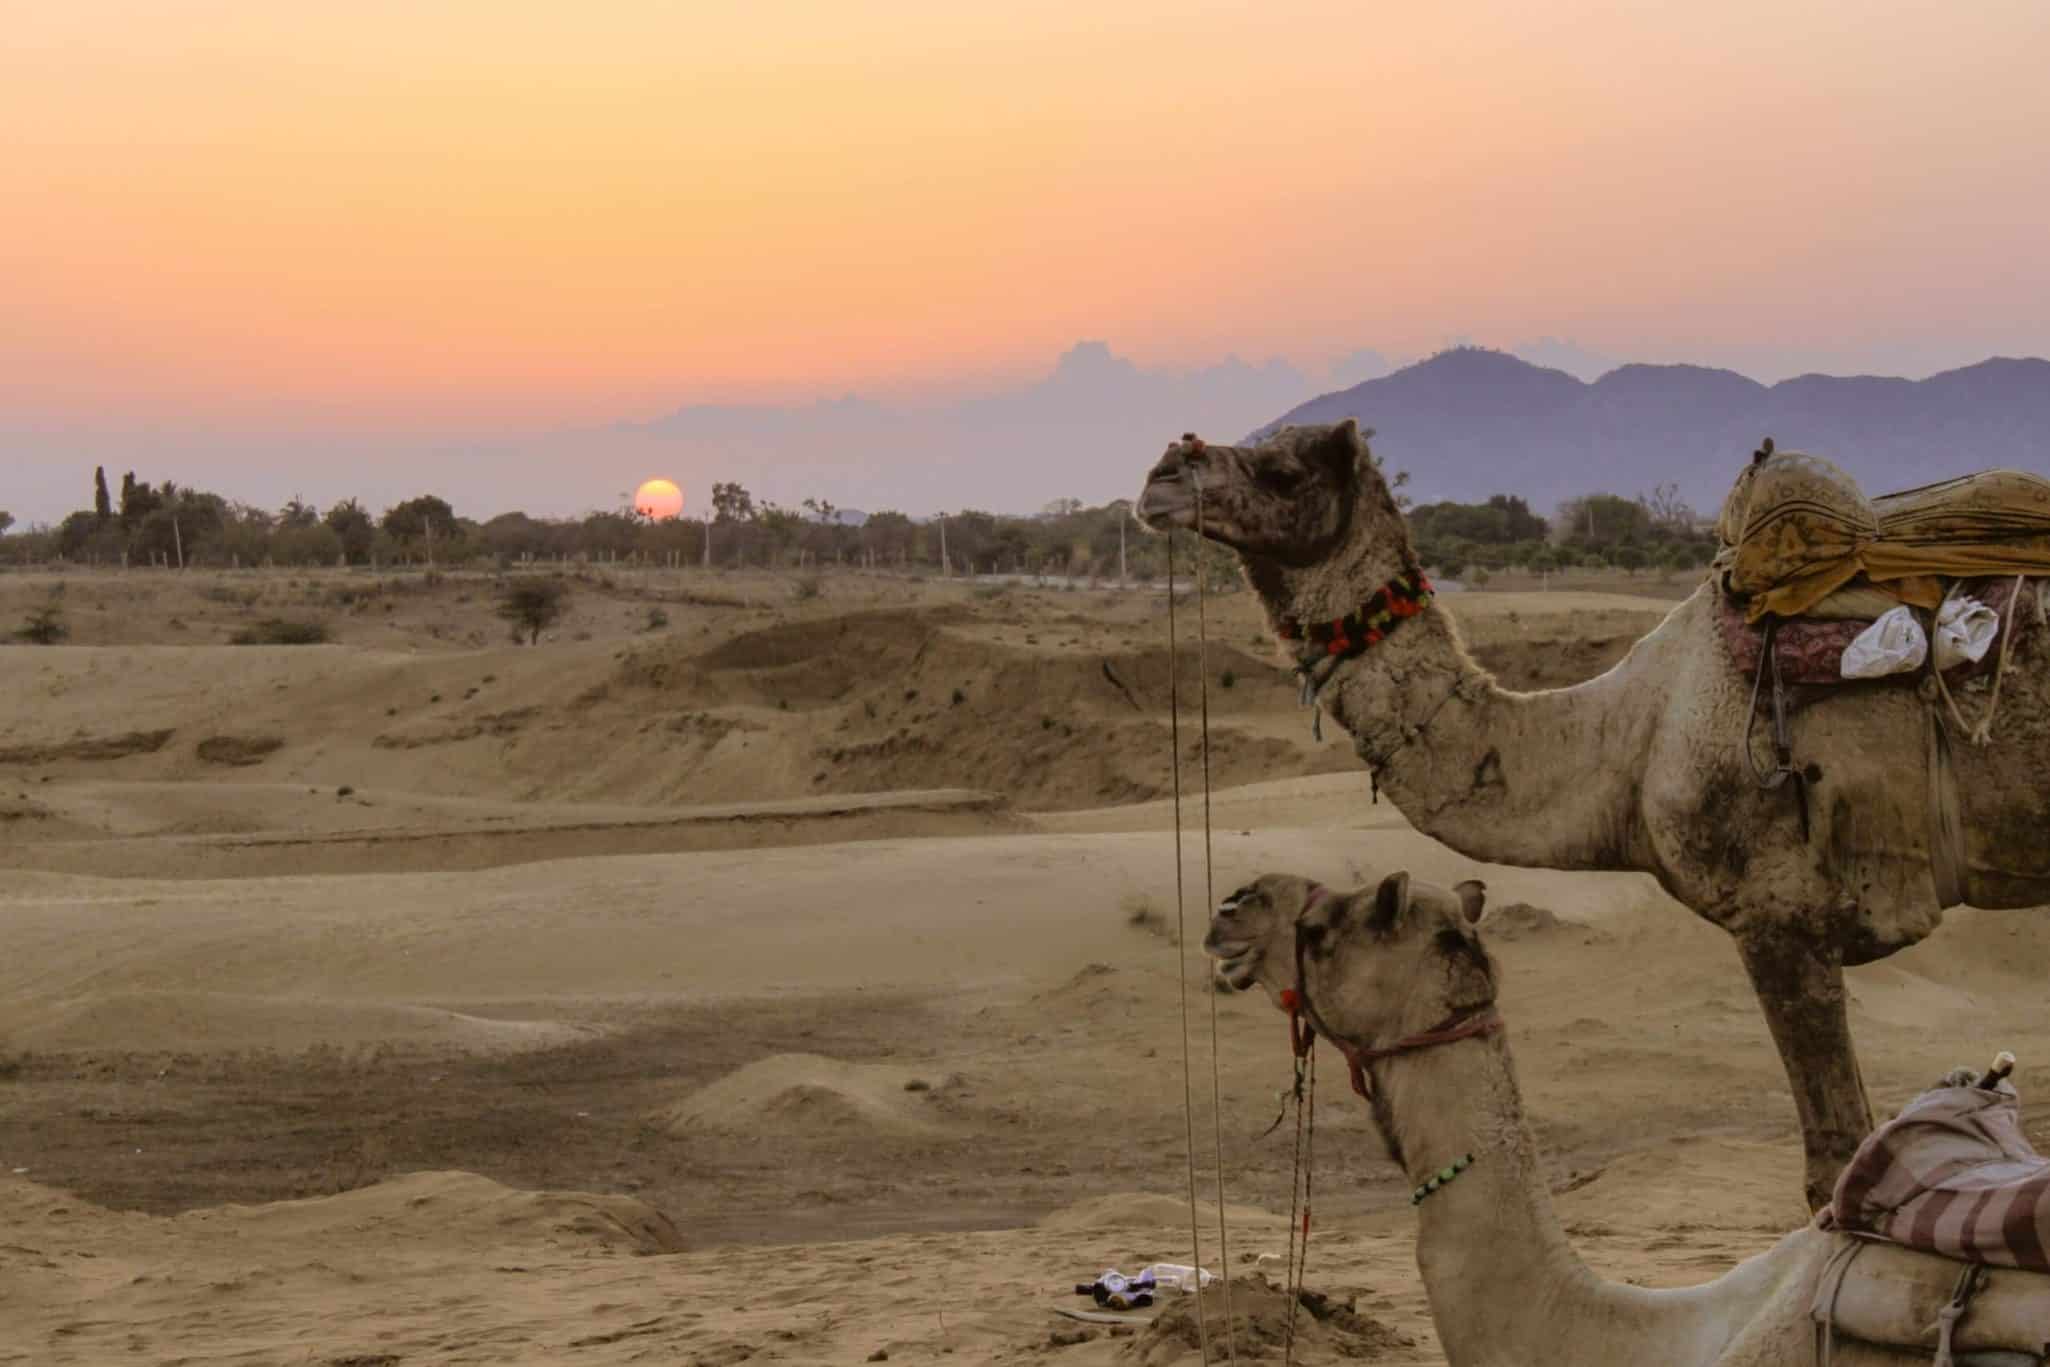 How to plan an unforgettable camel safari in Pushkar